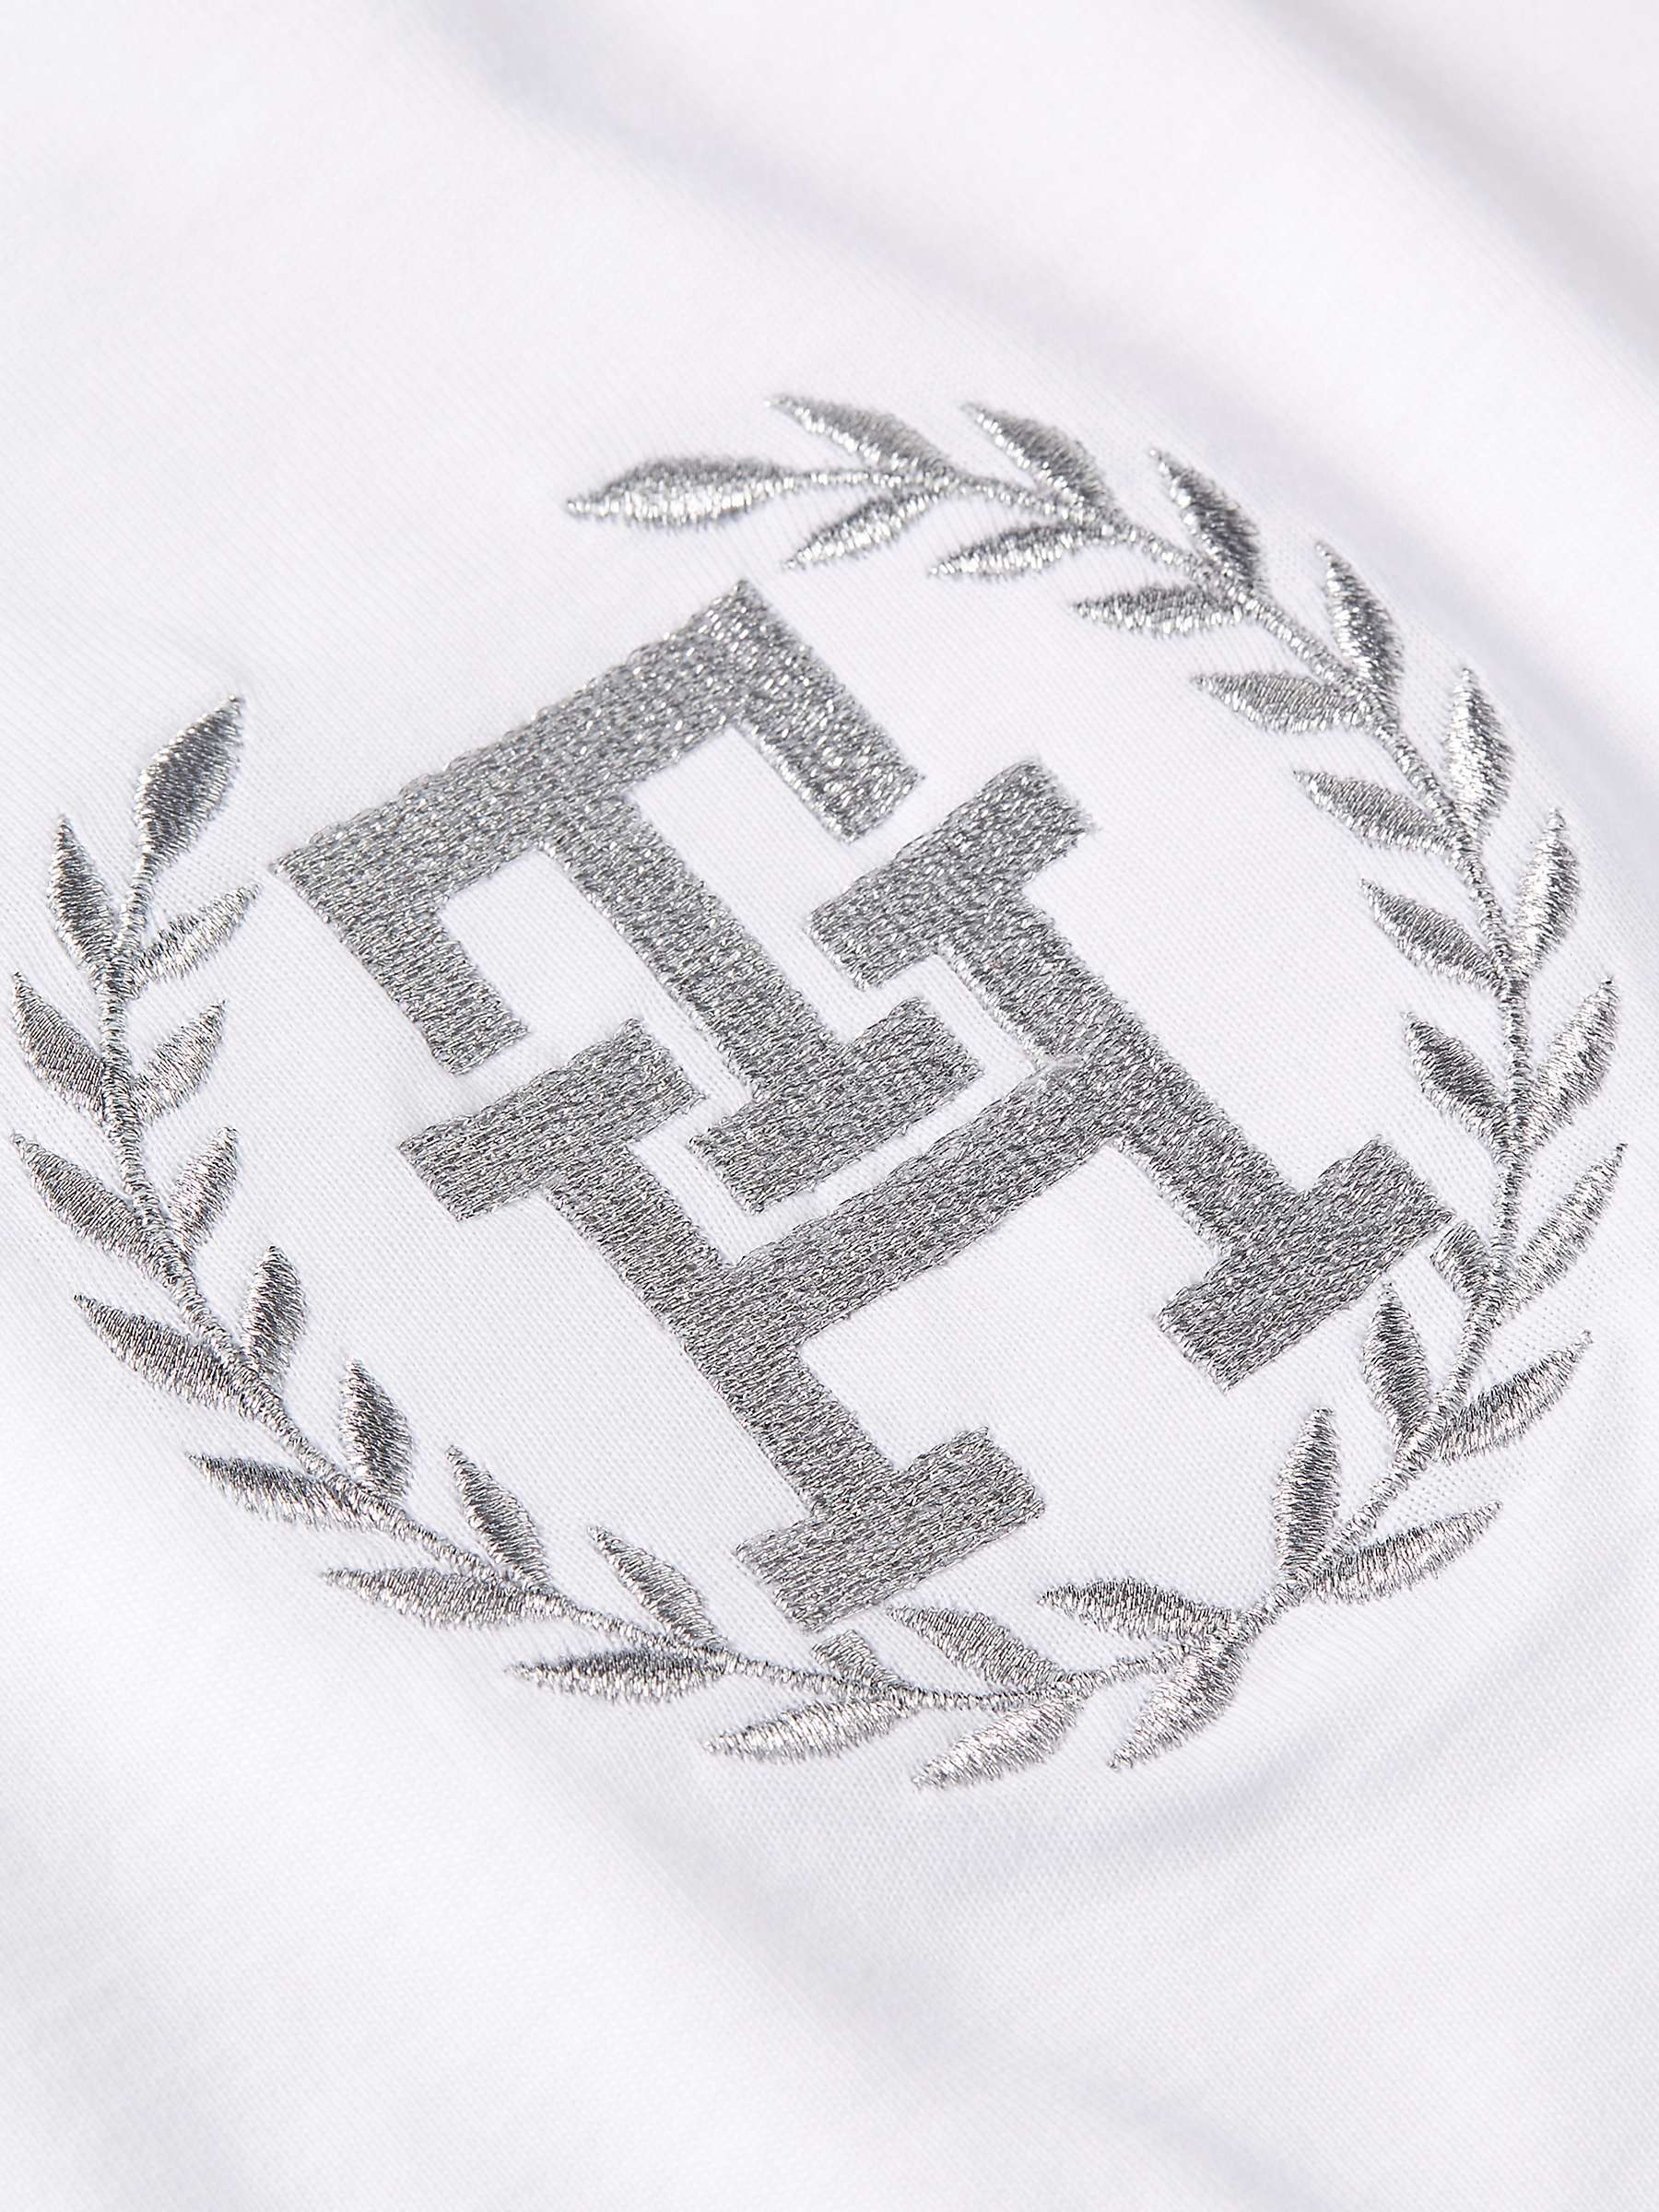 Buy Tommy Hilfiger Slim Fit Logo T-Shirt, Optic White Online at johnlewis.com